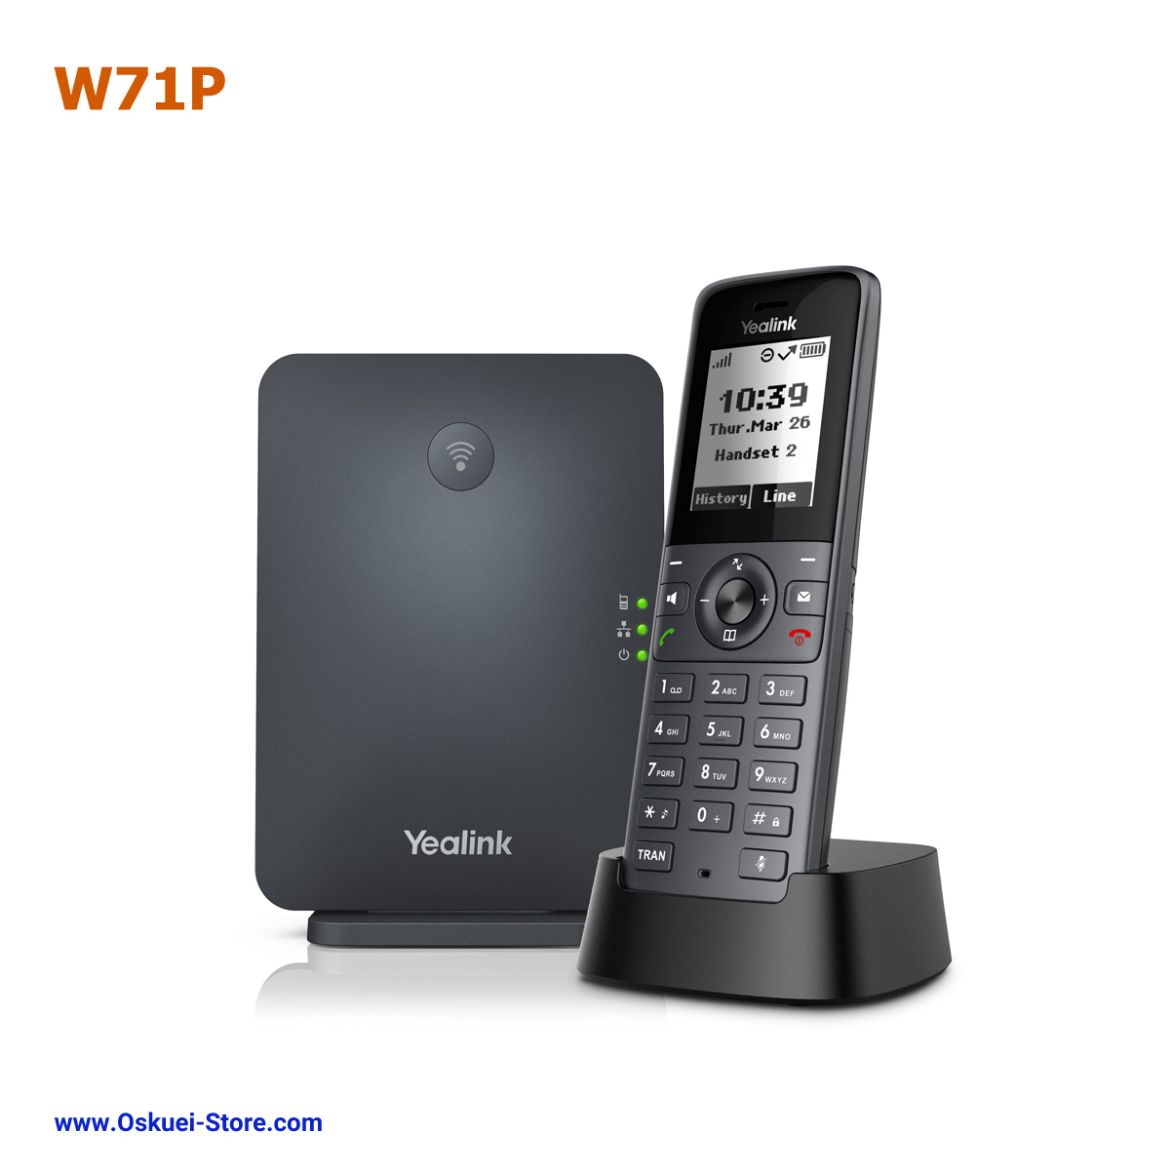 Yealink W71P DECT Phone Black Front